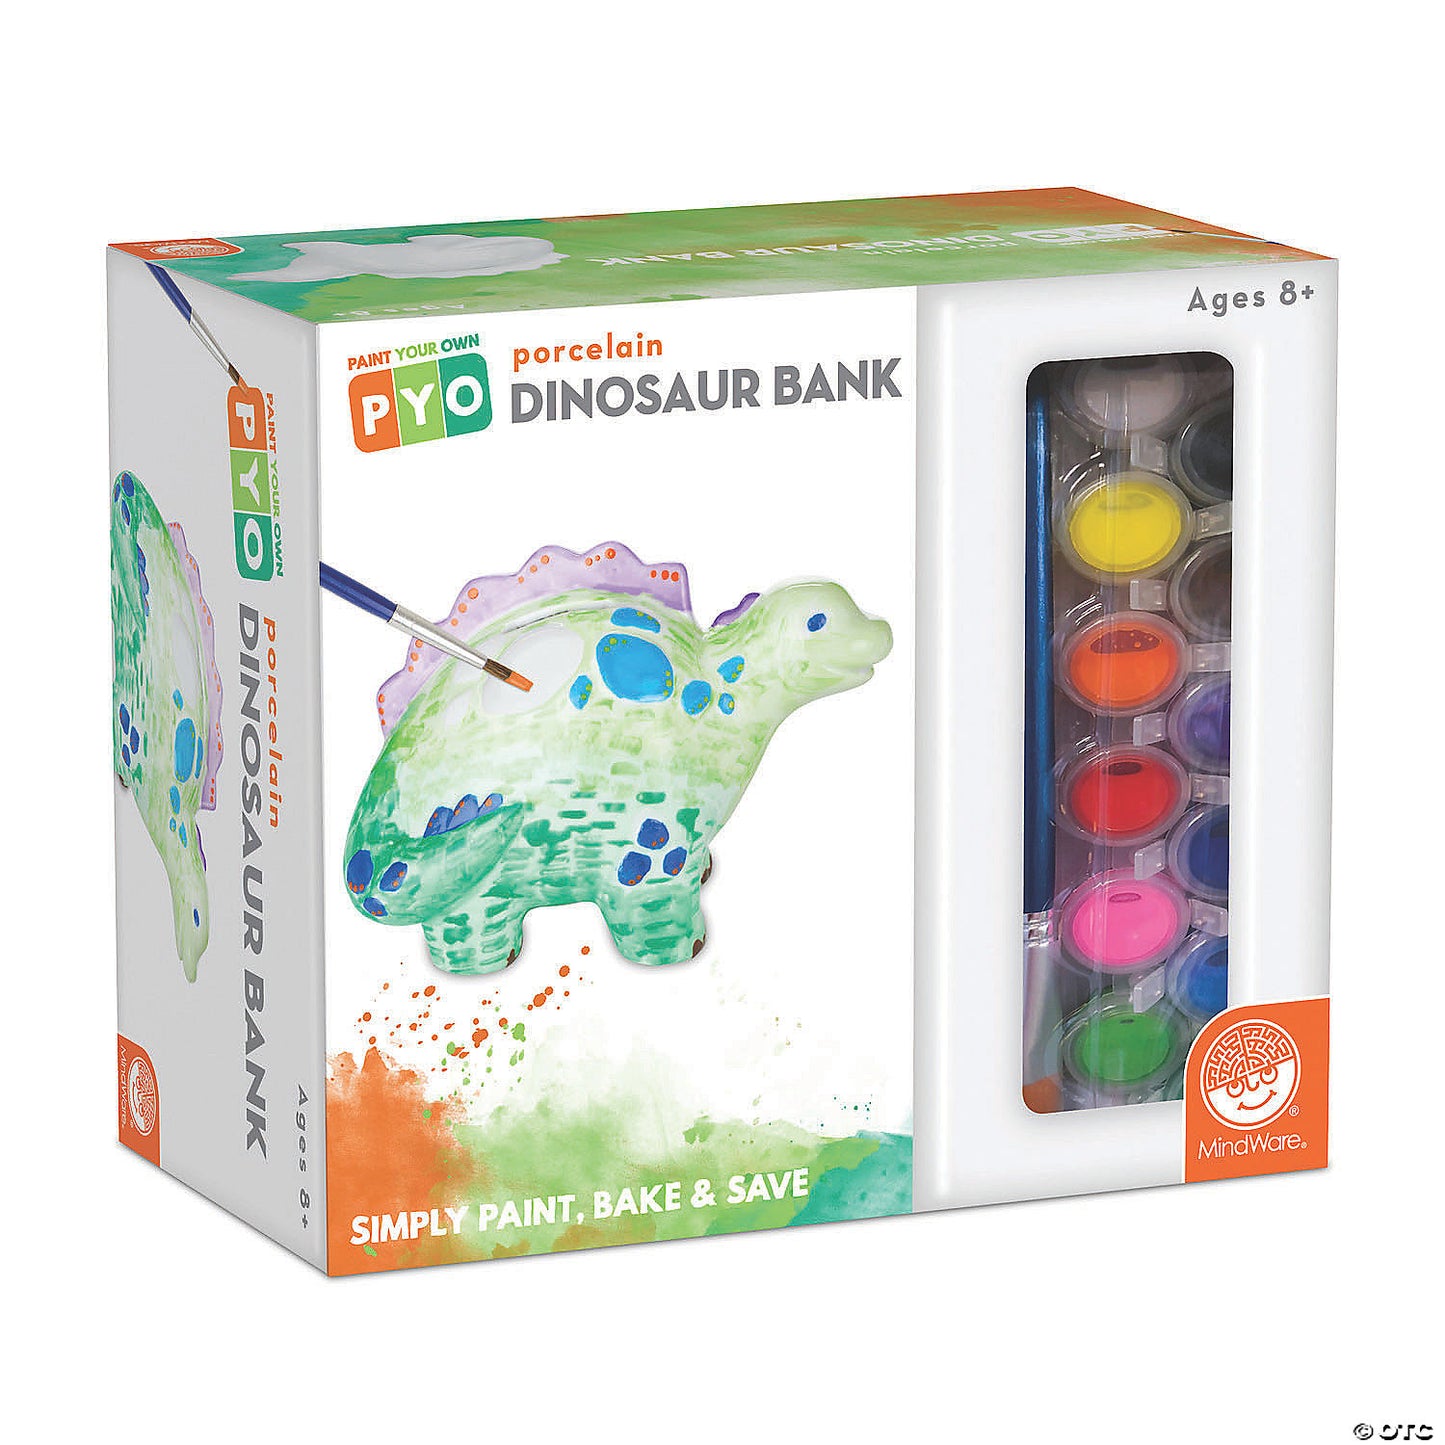 Paint Your Own Pocelain Dinosaur Bank